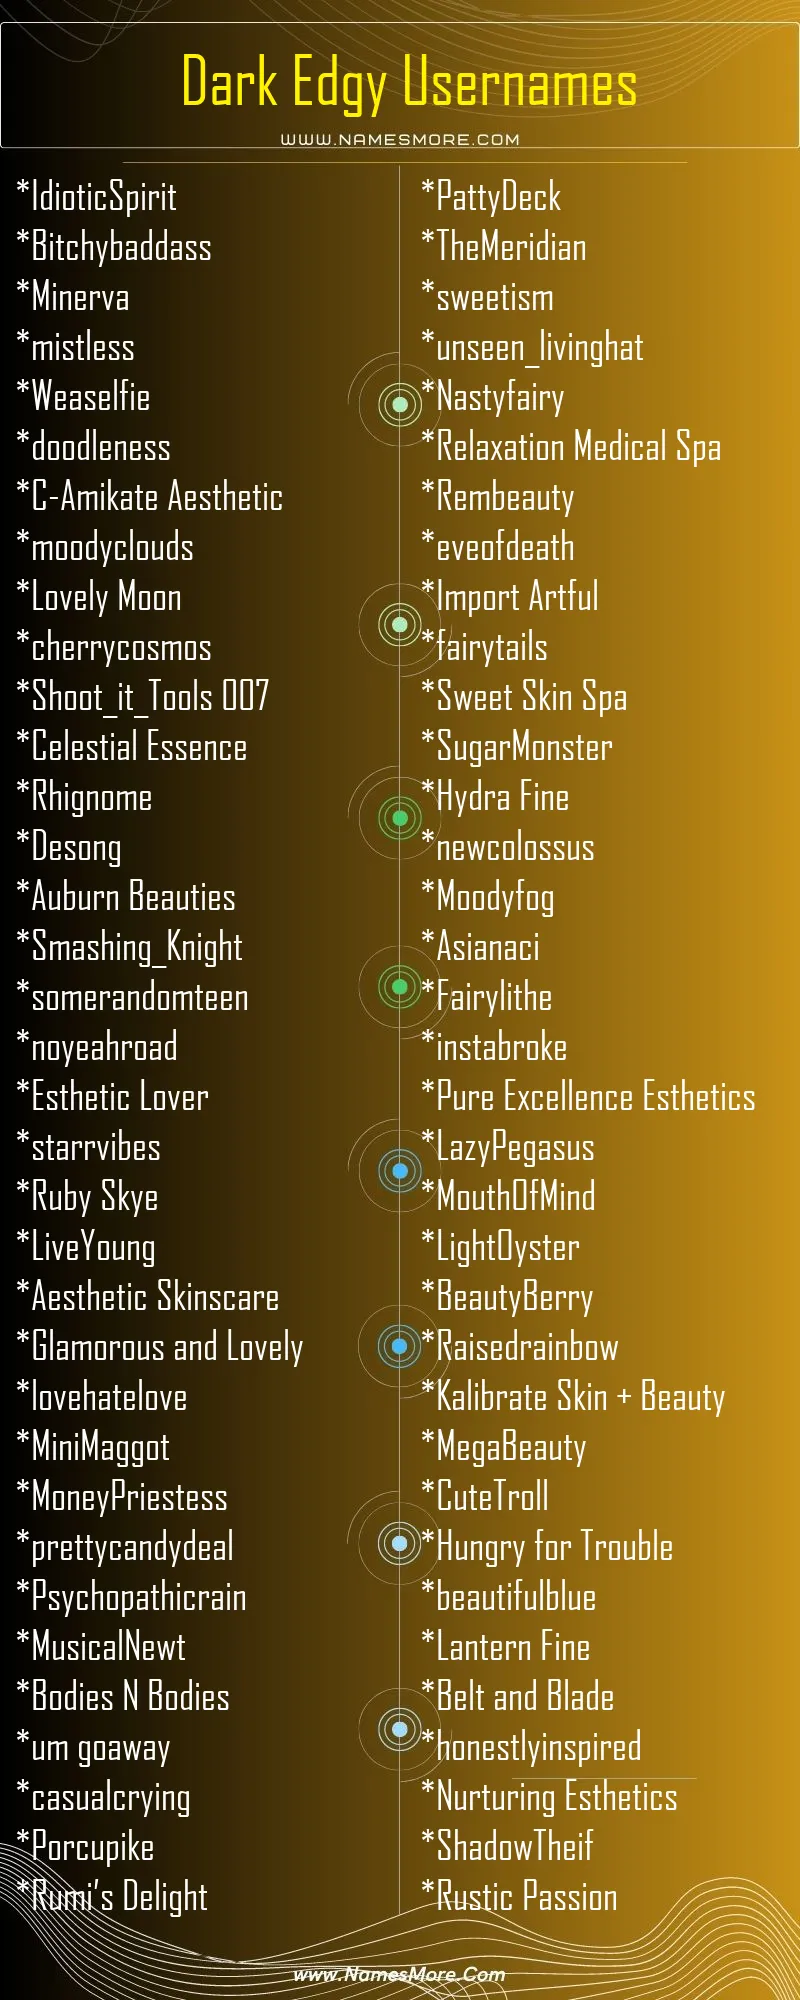 Dark Edgy Usernames List Infographic